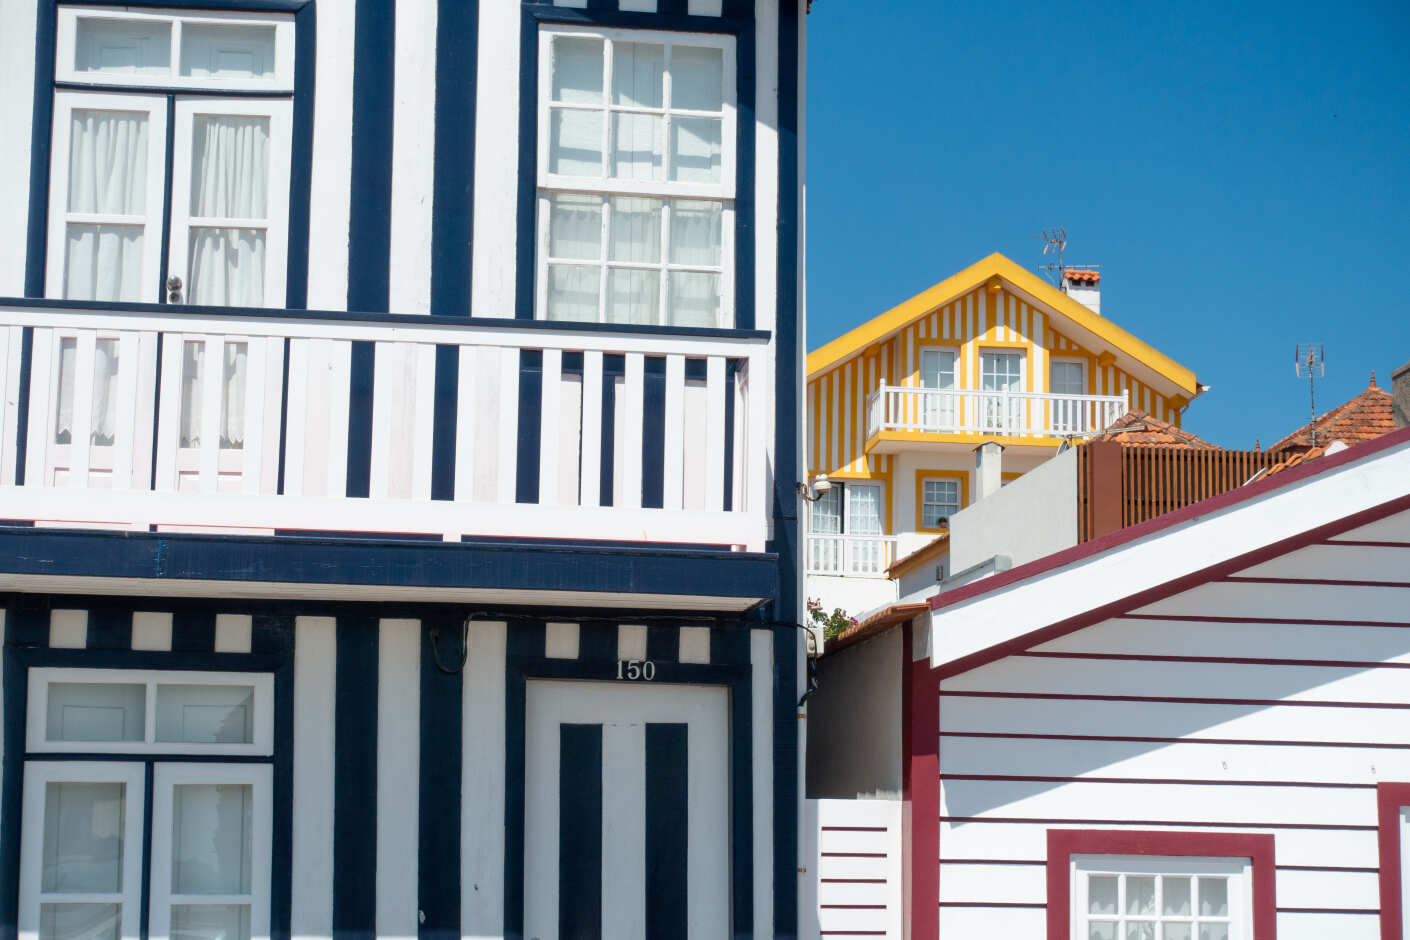 Boats, salt, and striped houses - Aveiro and Costa Nova